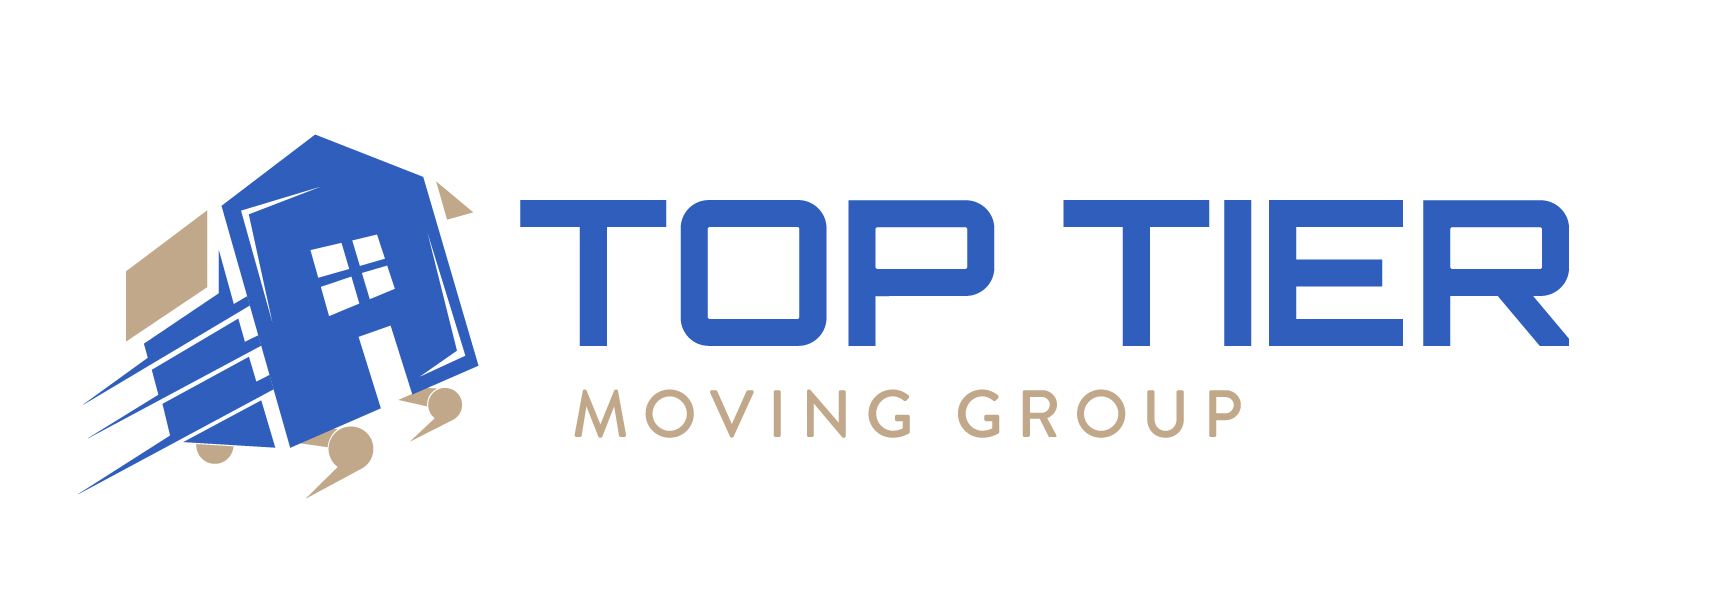 Toptier Group